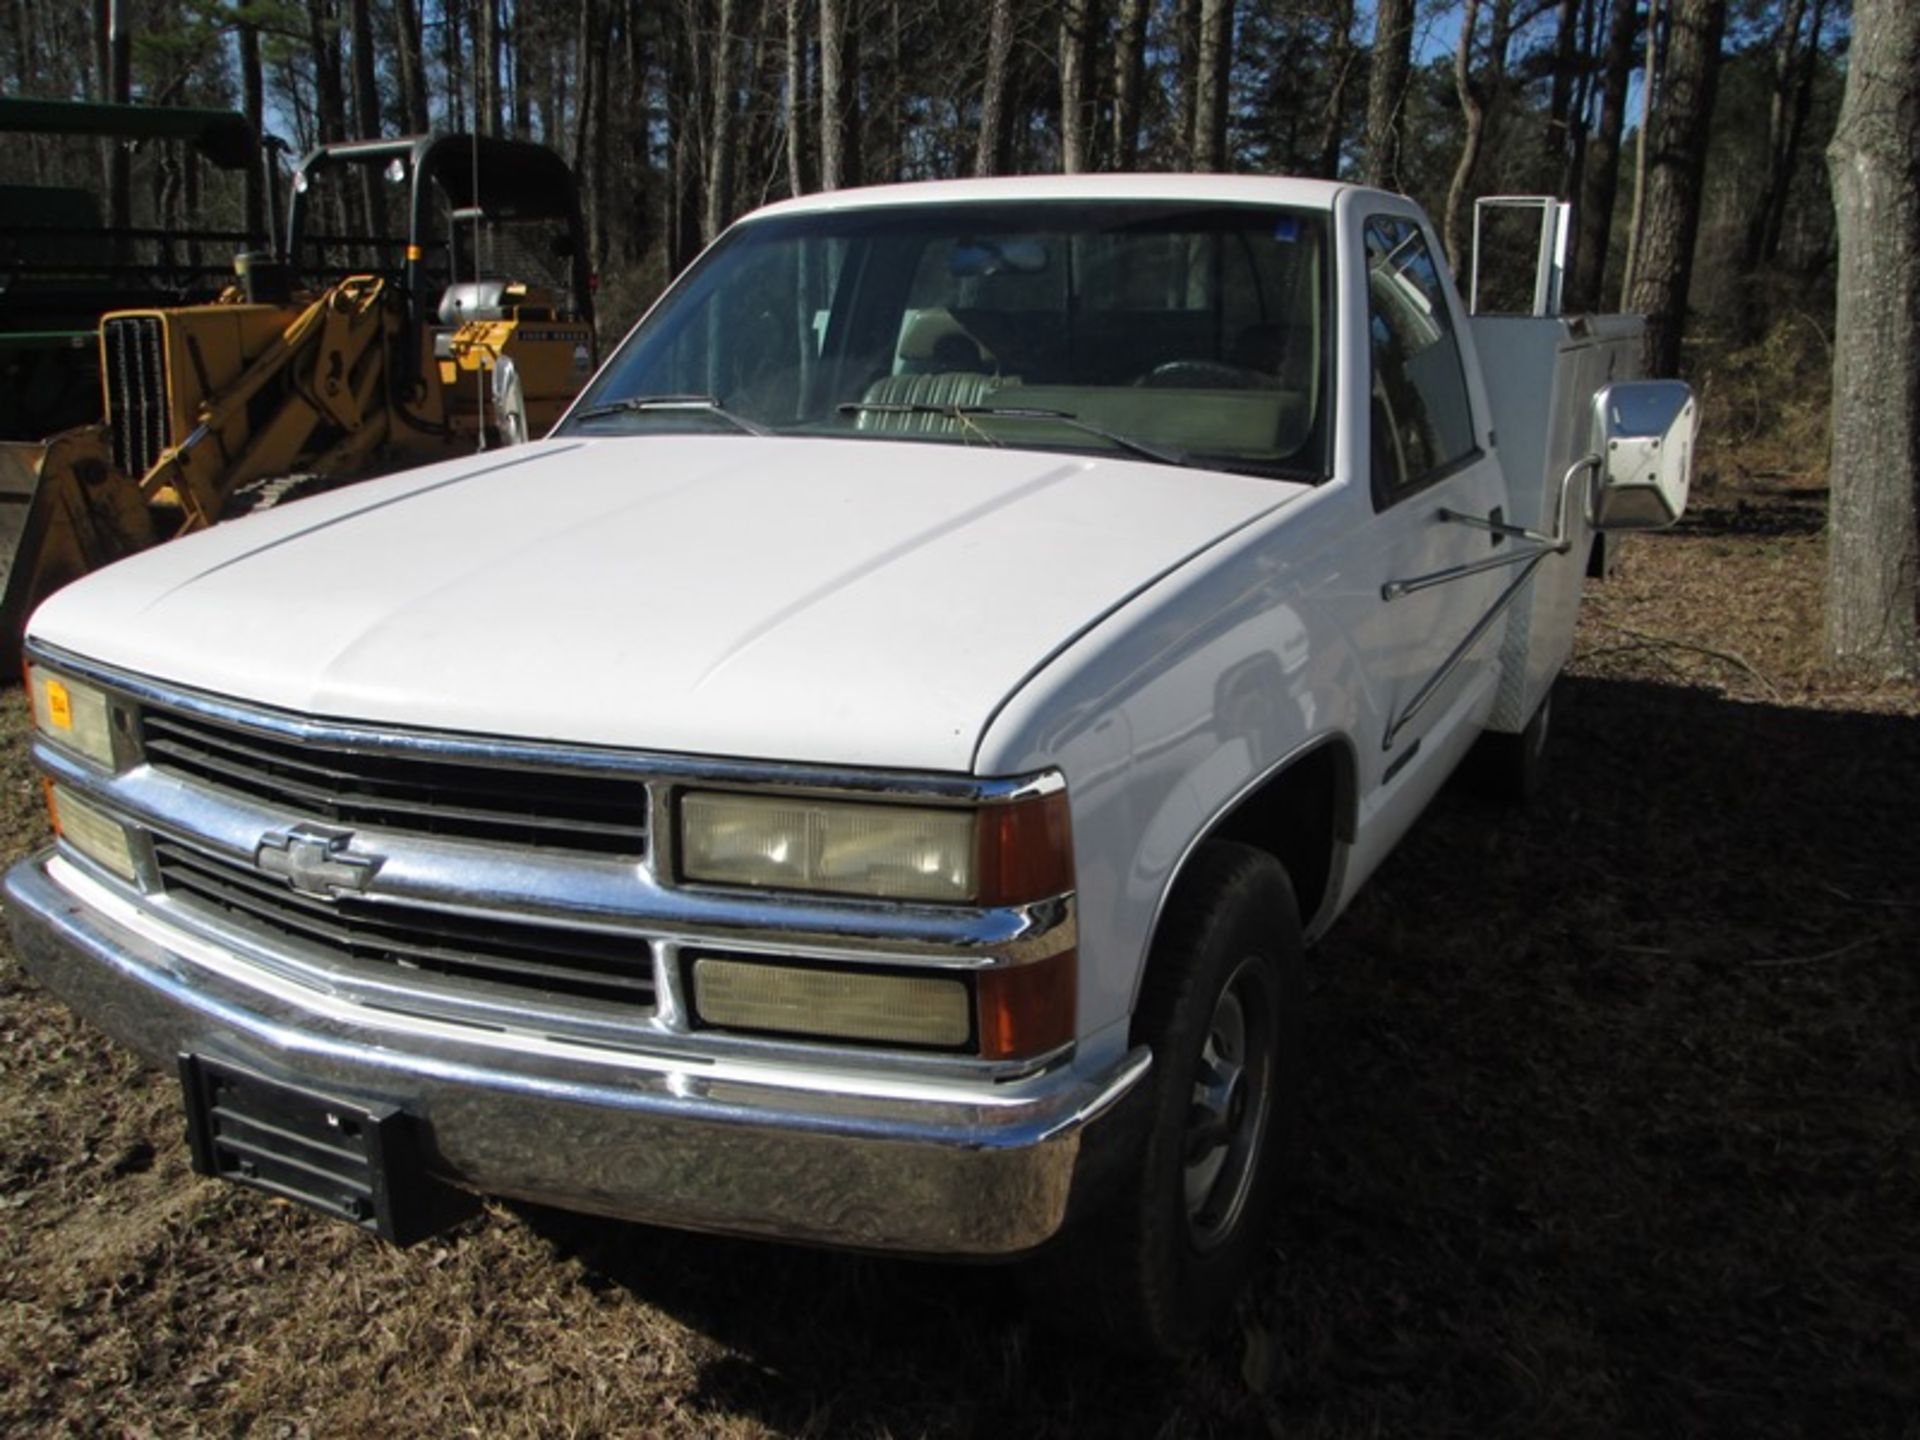 1994 Chevrolet 2500 service truck vin #1GBGC24K5REZ53929  153,988 miles - Image 5 of 5